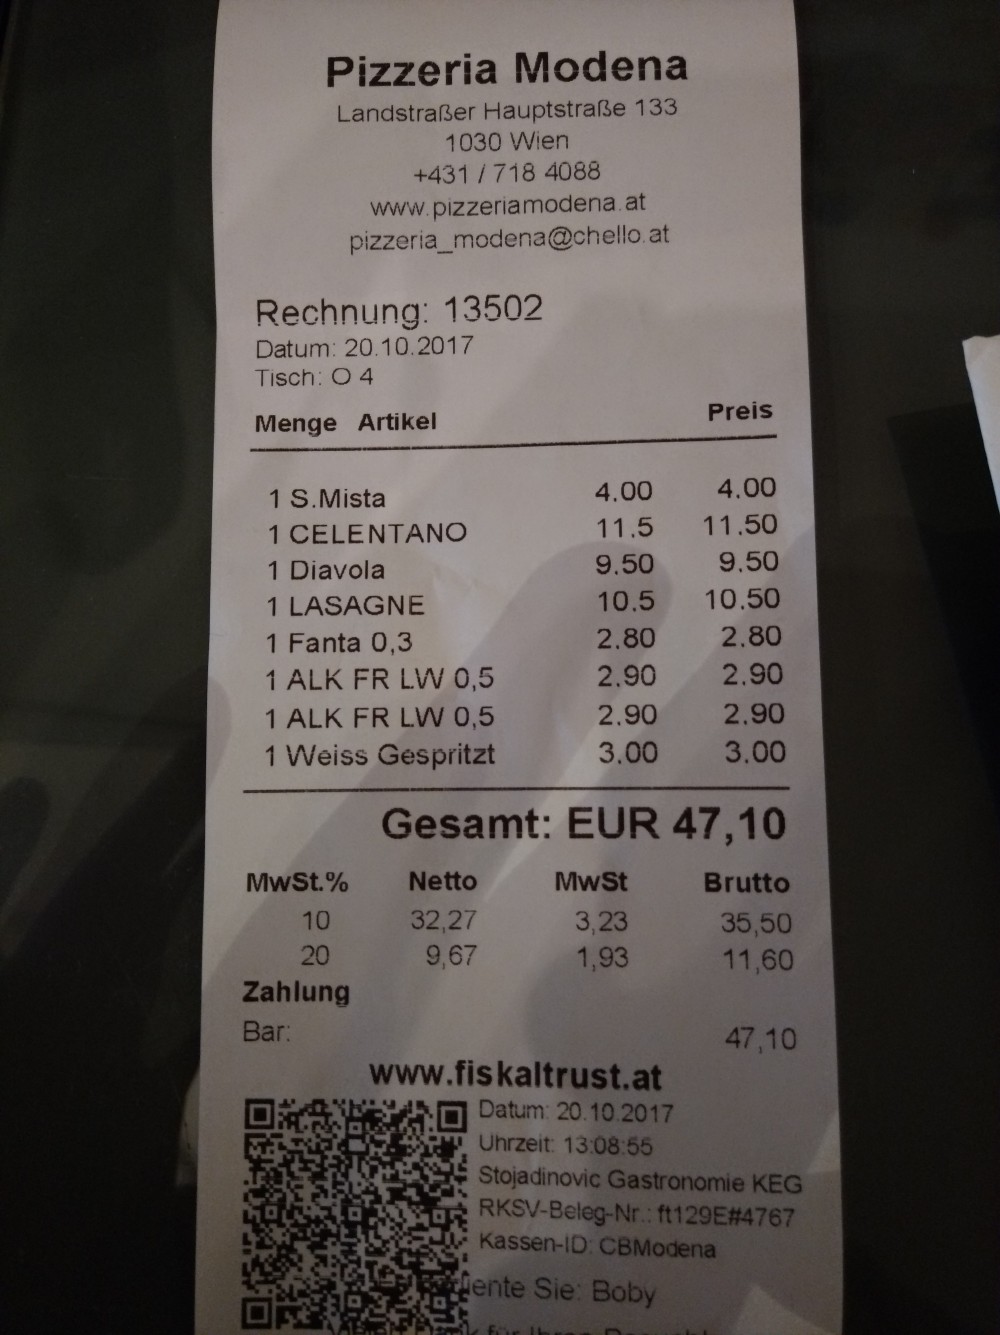 Rechnung - Pizzeria Modena - Wien